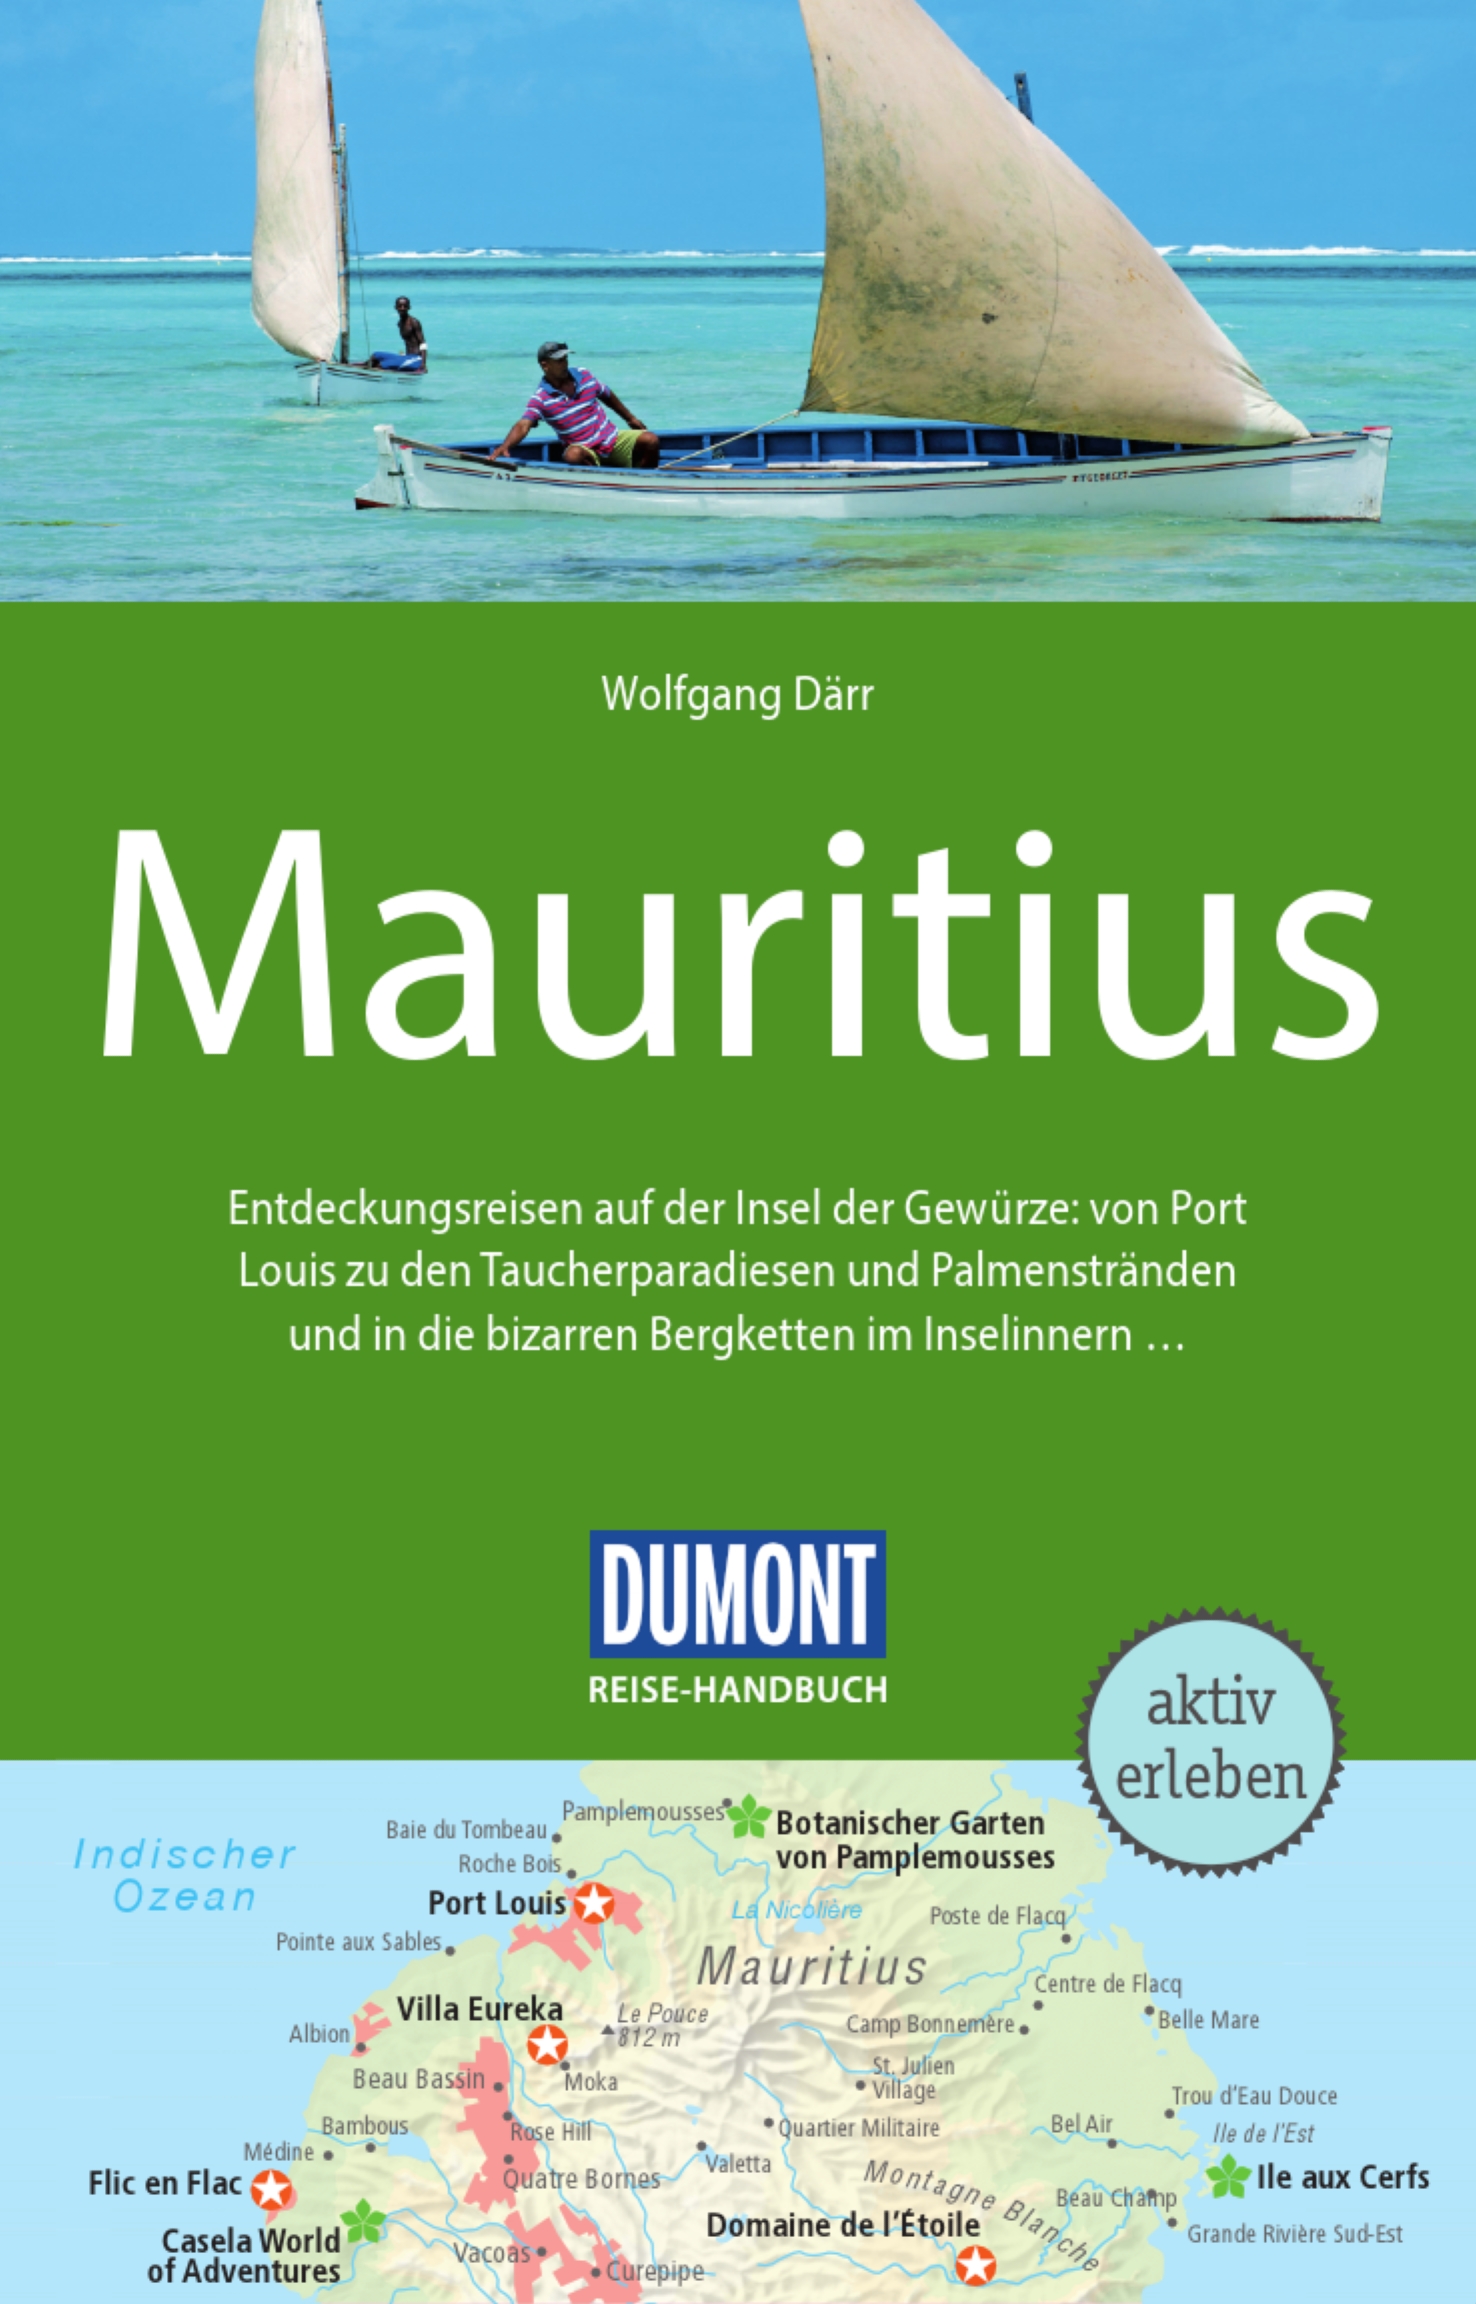 DuMont Reise-Handbuch - Mauritius (Cover)